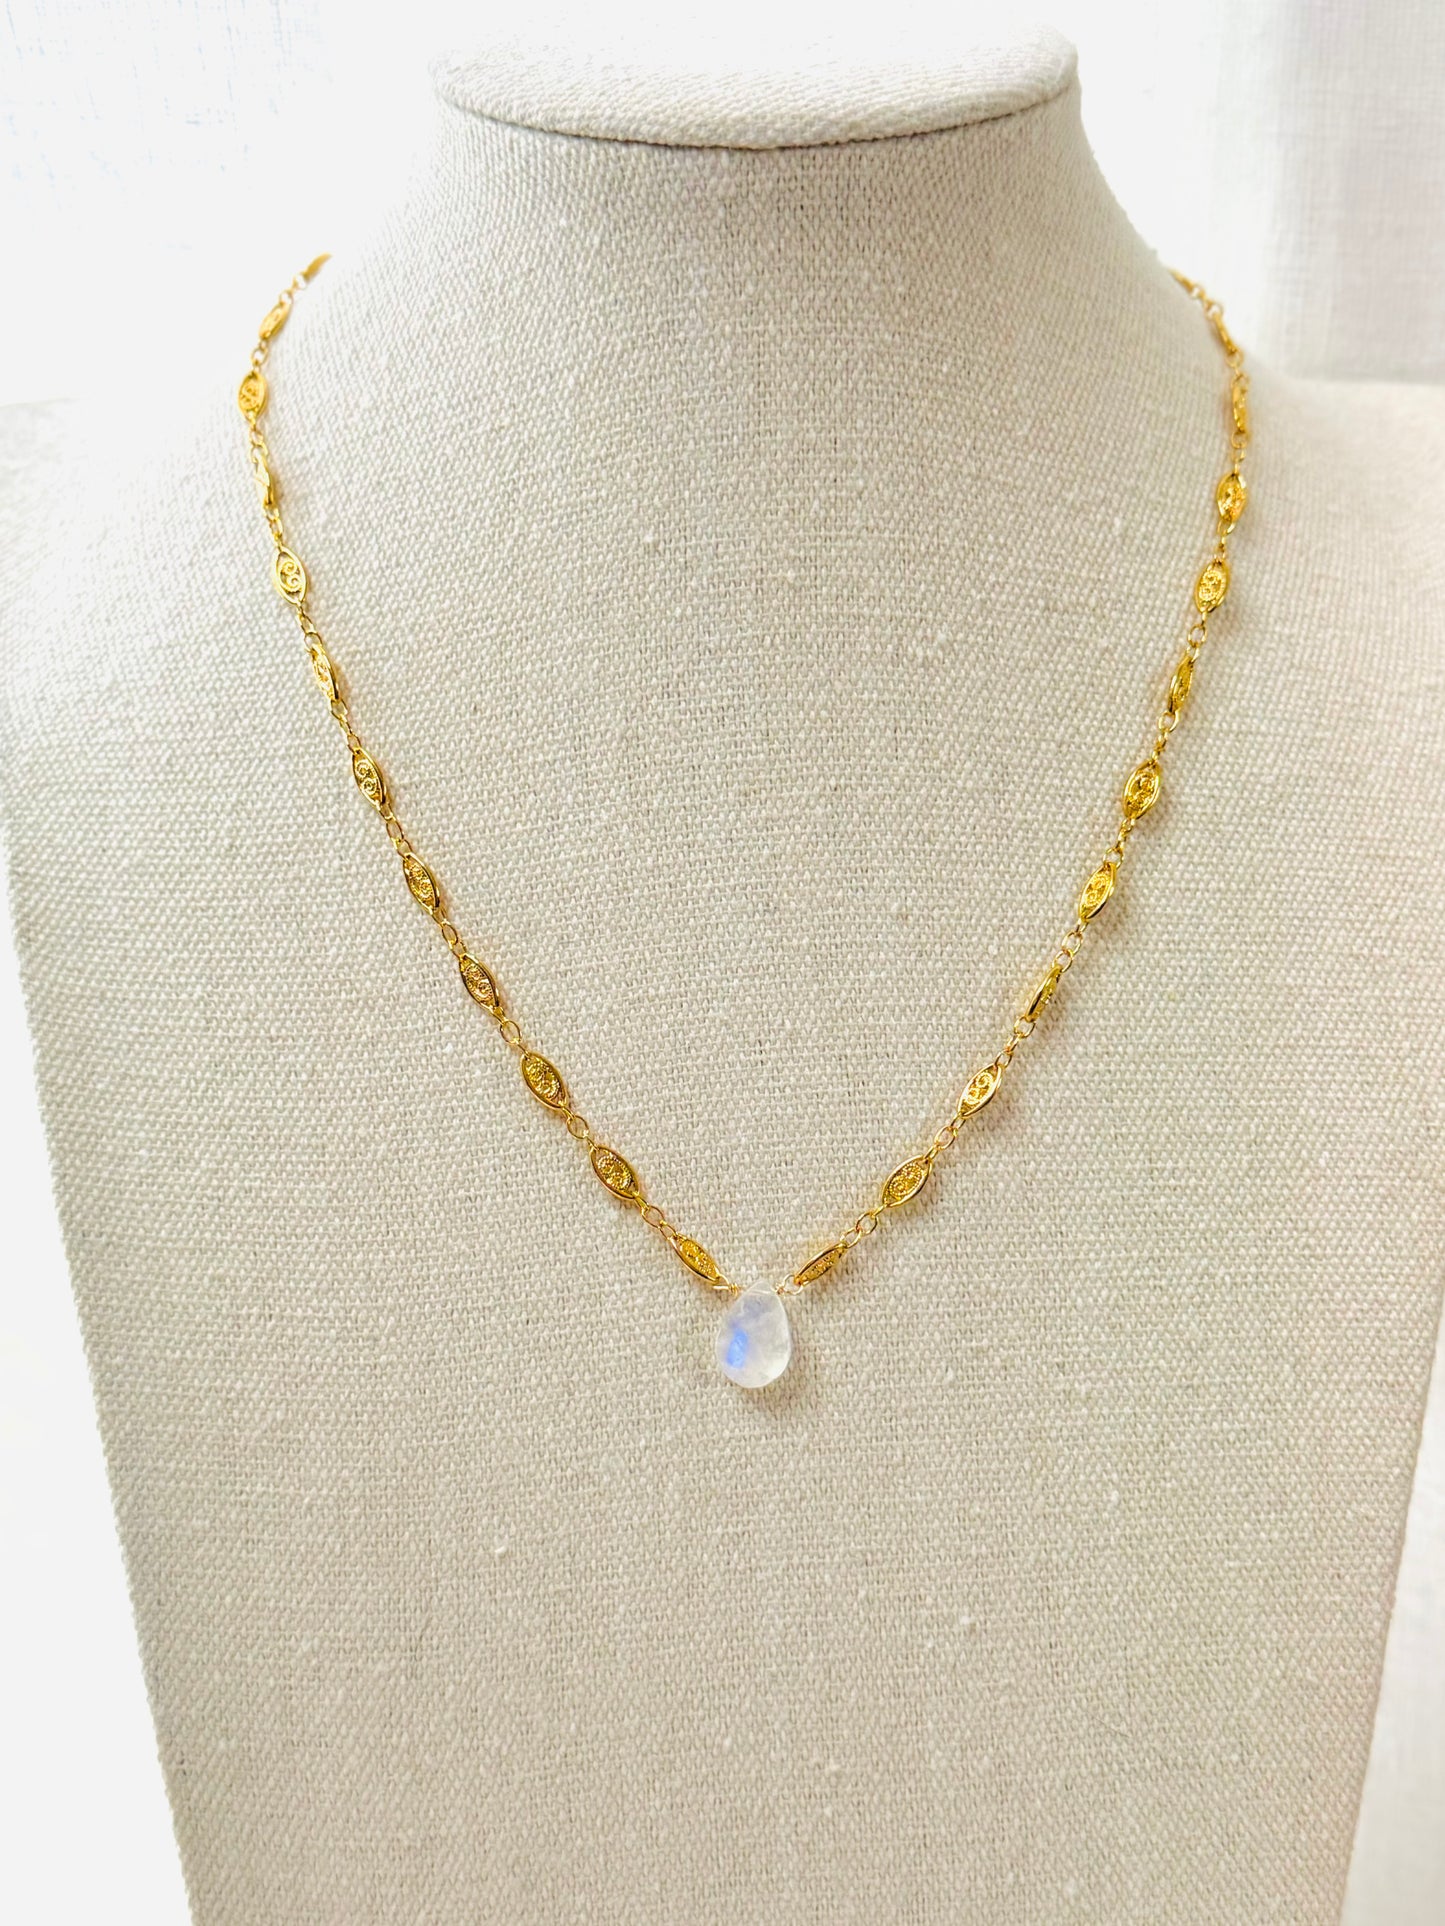 Rainbow Moonstone + Gold Necklace